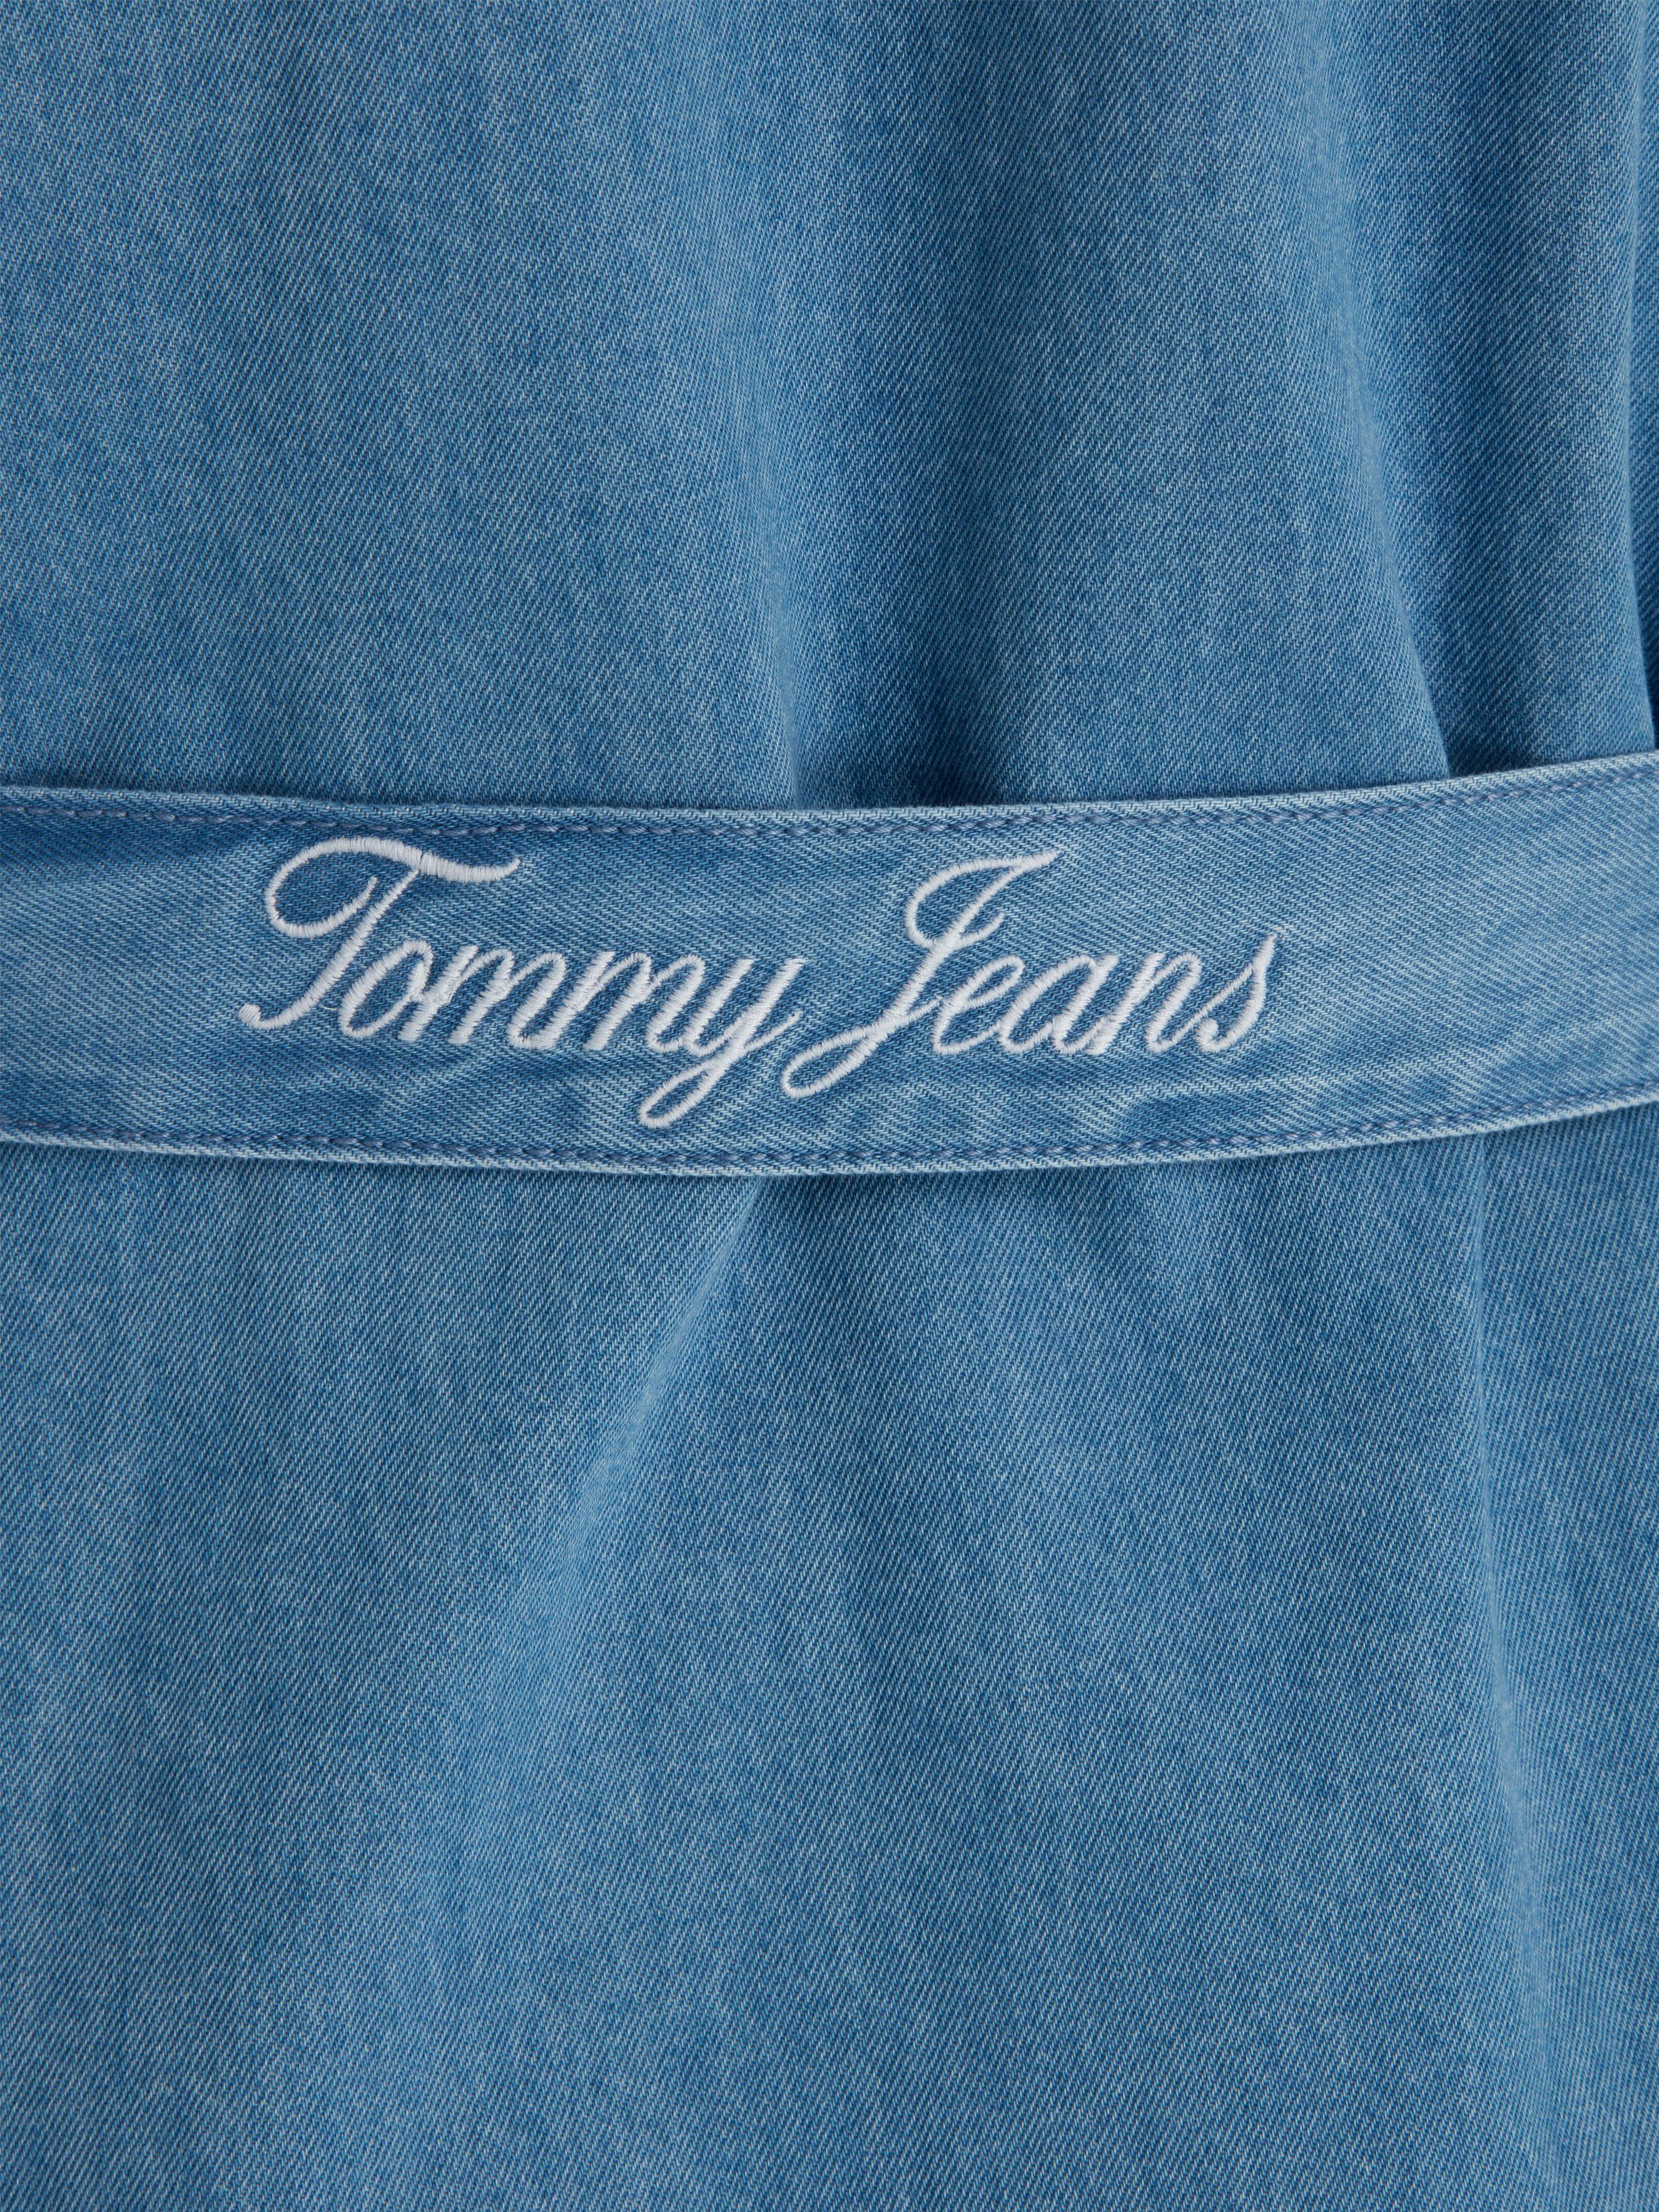 Tommy Jeans DRESS SHIRT BELTED EXT Curve Shirtkleid DENIM TJW